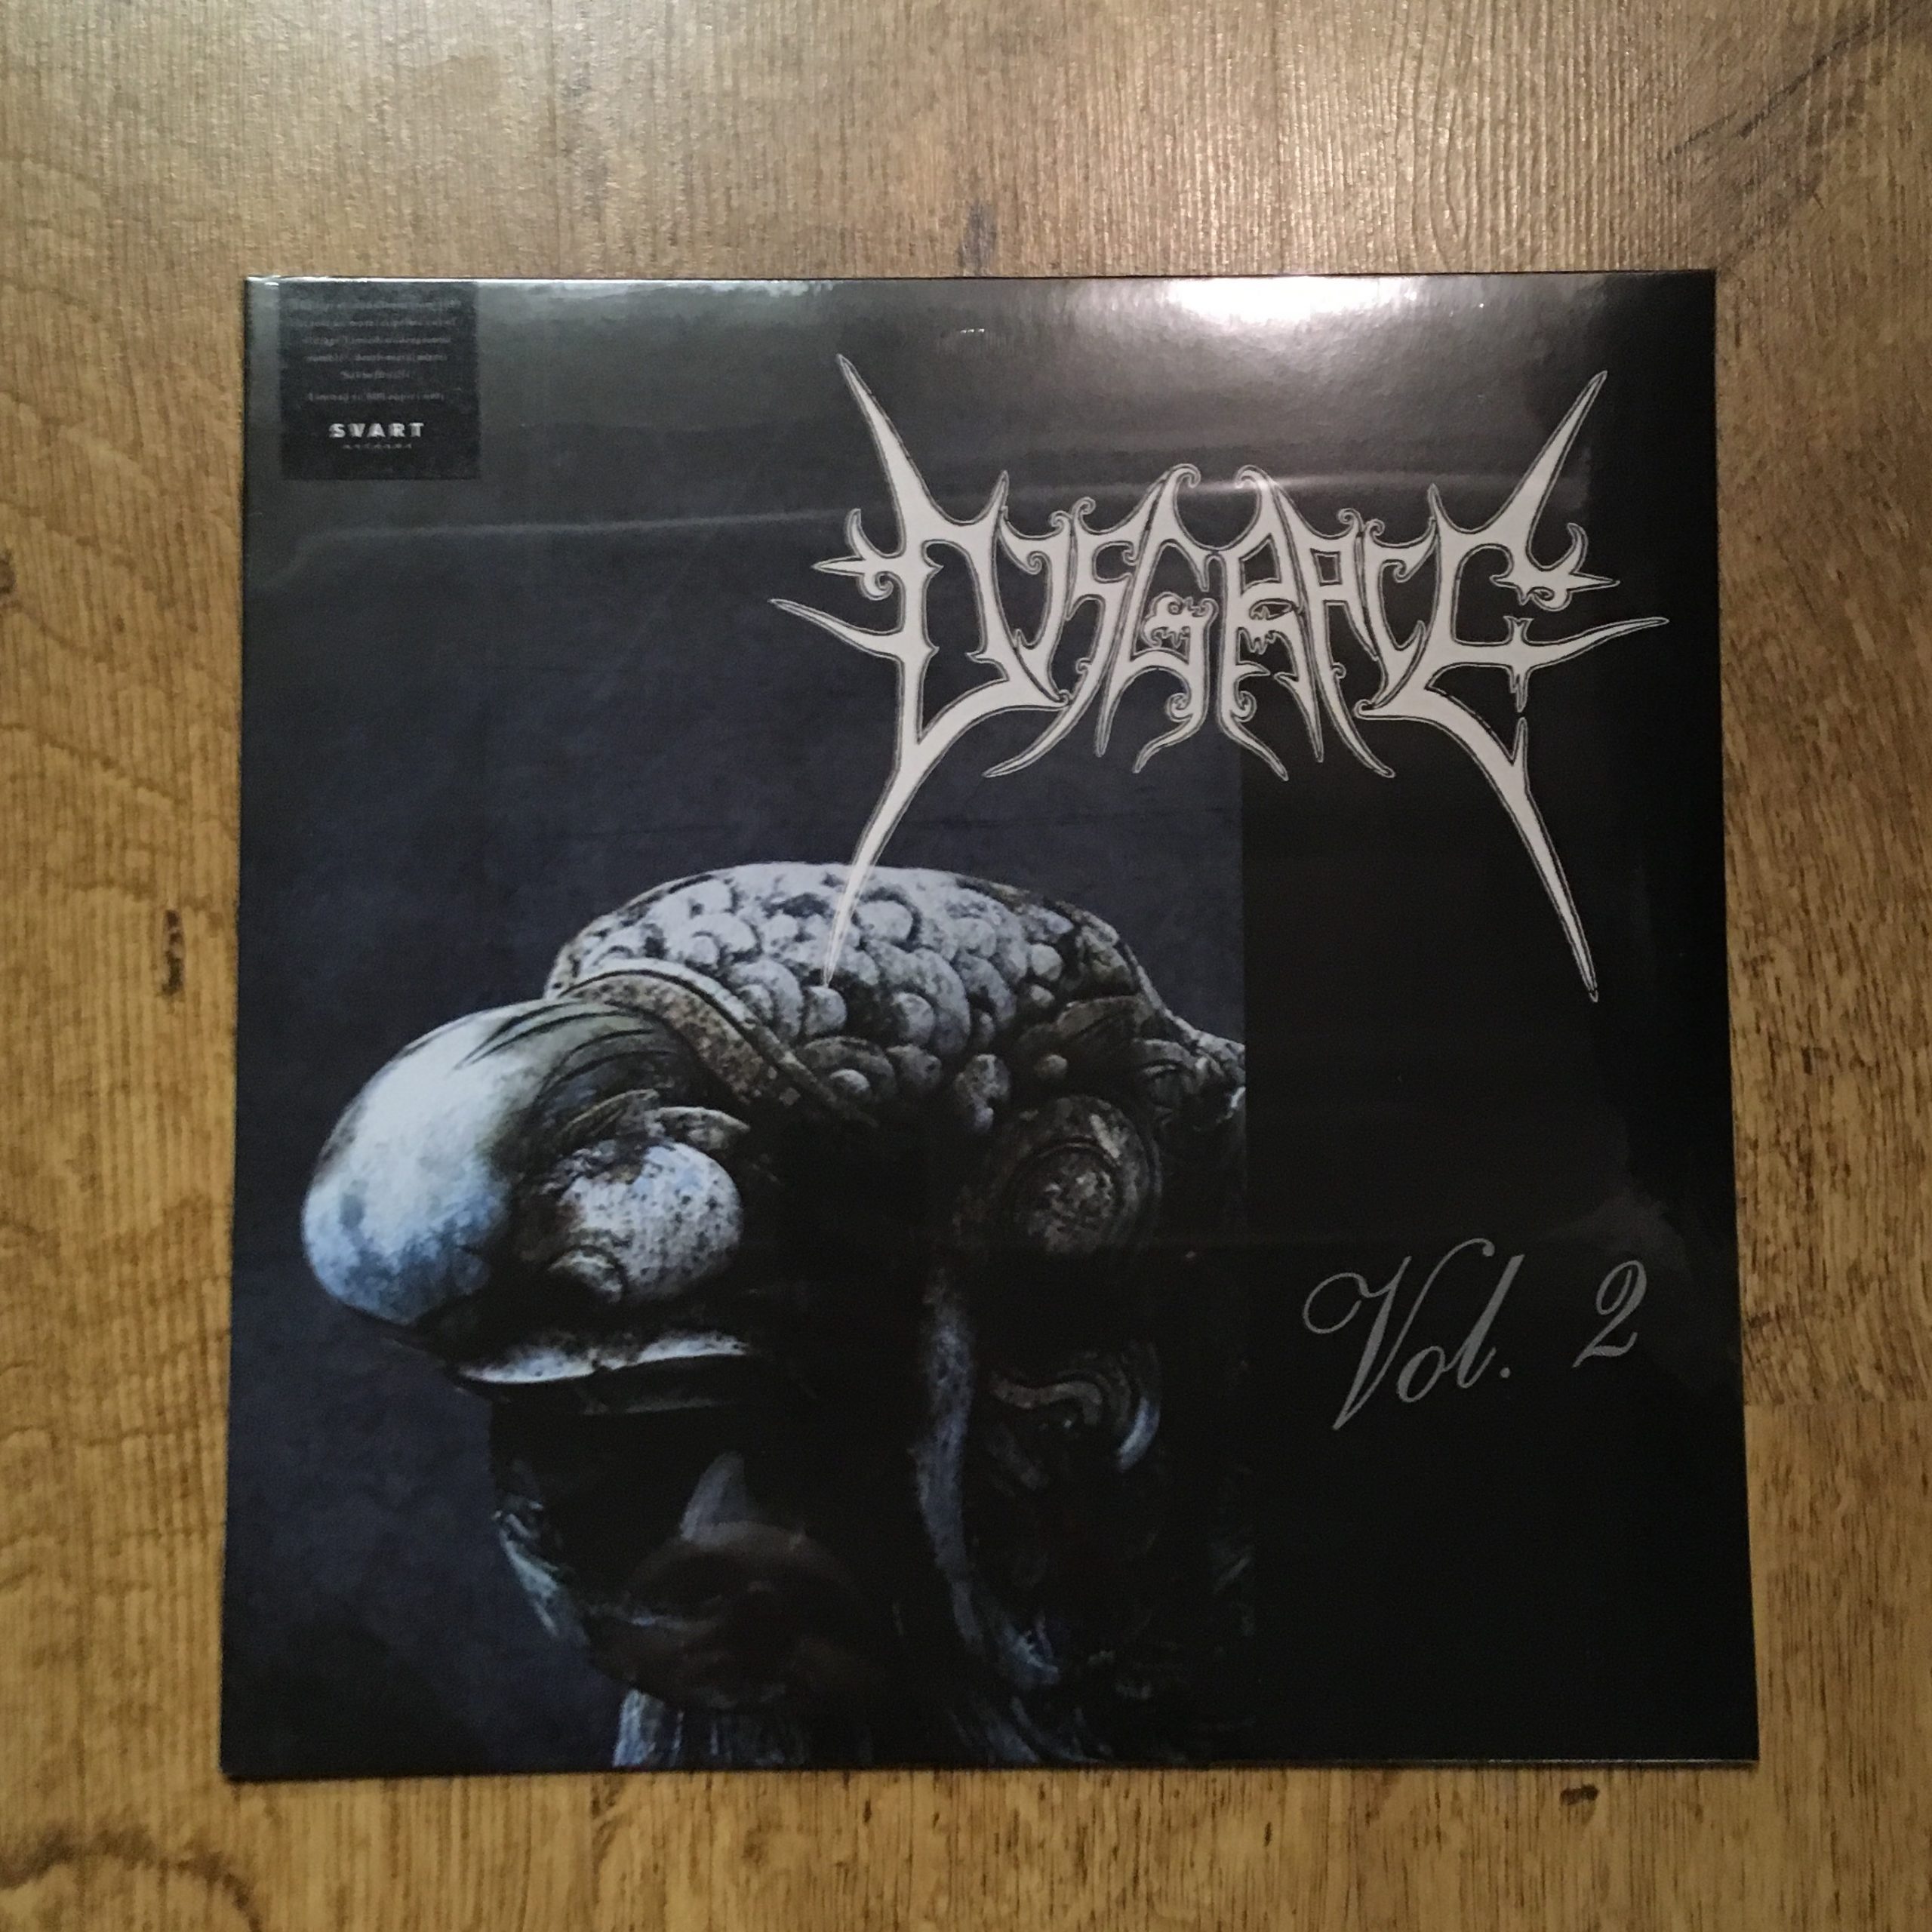 Photo of the Disgrace - 'Vol. 2' LP (Black vinyl)